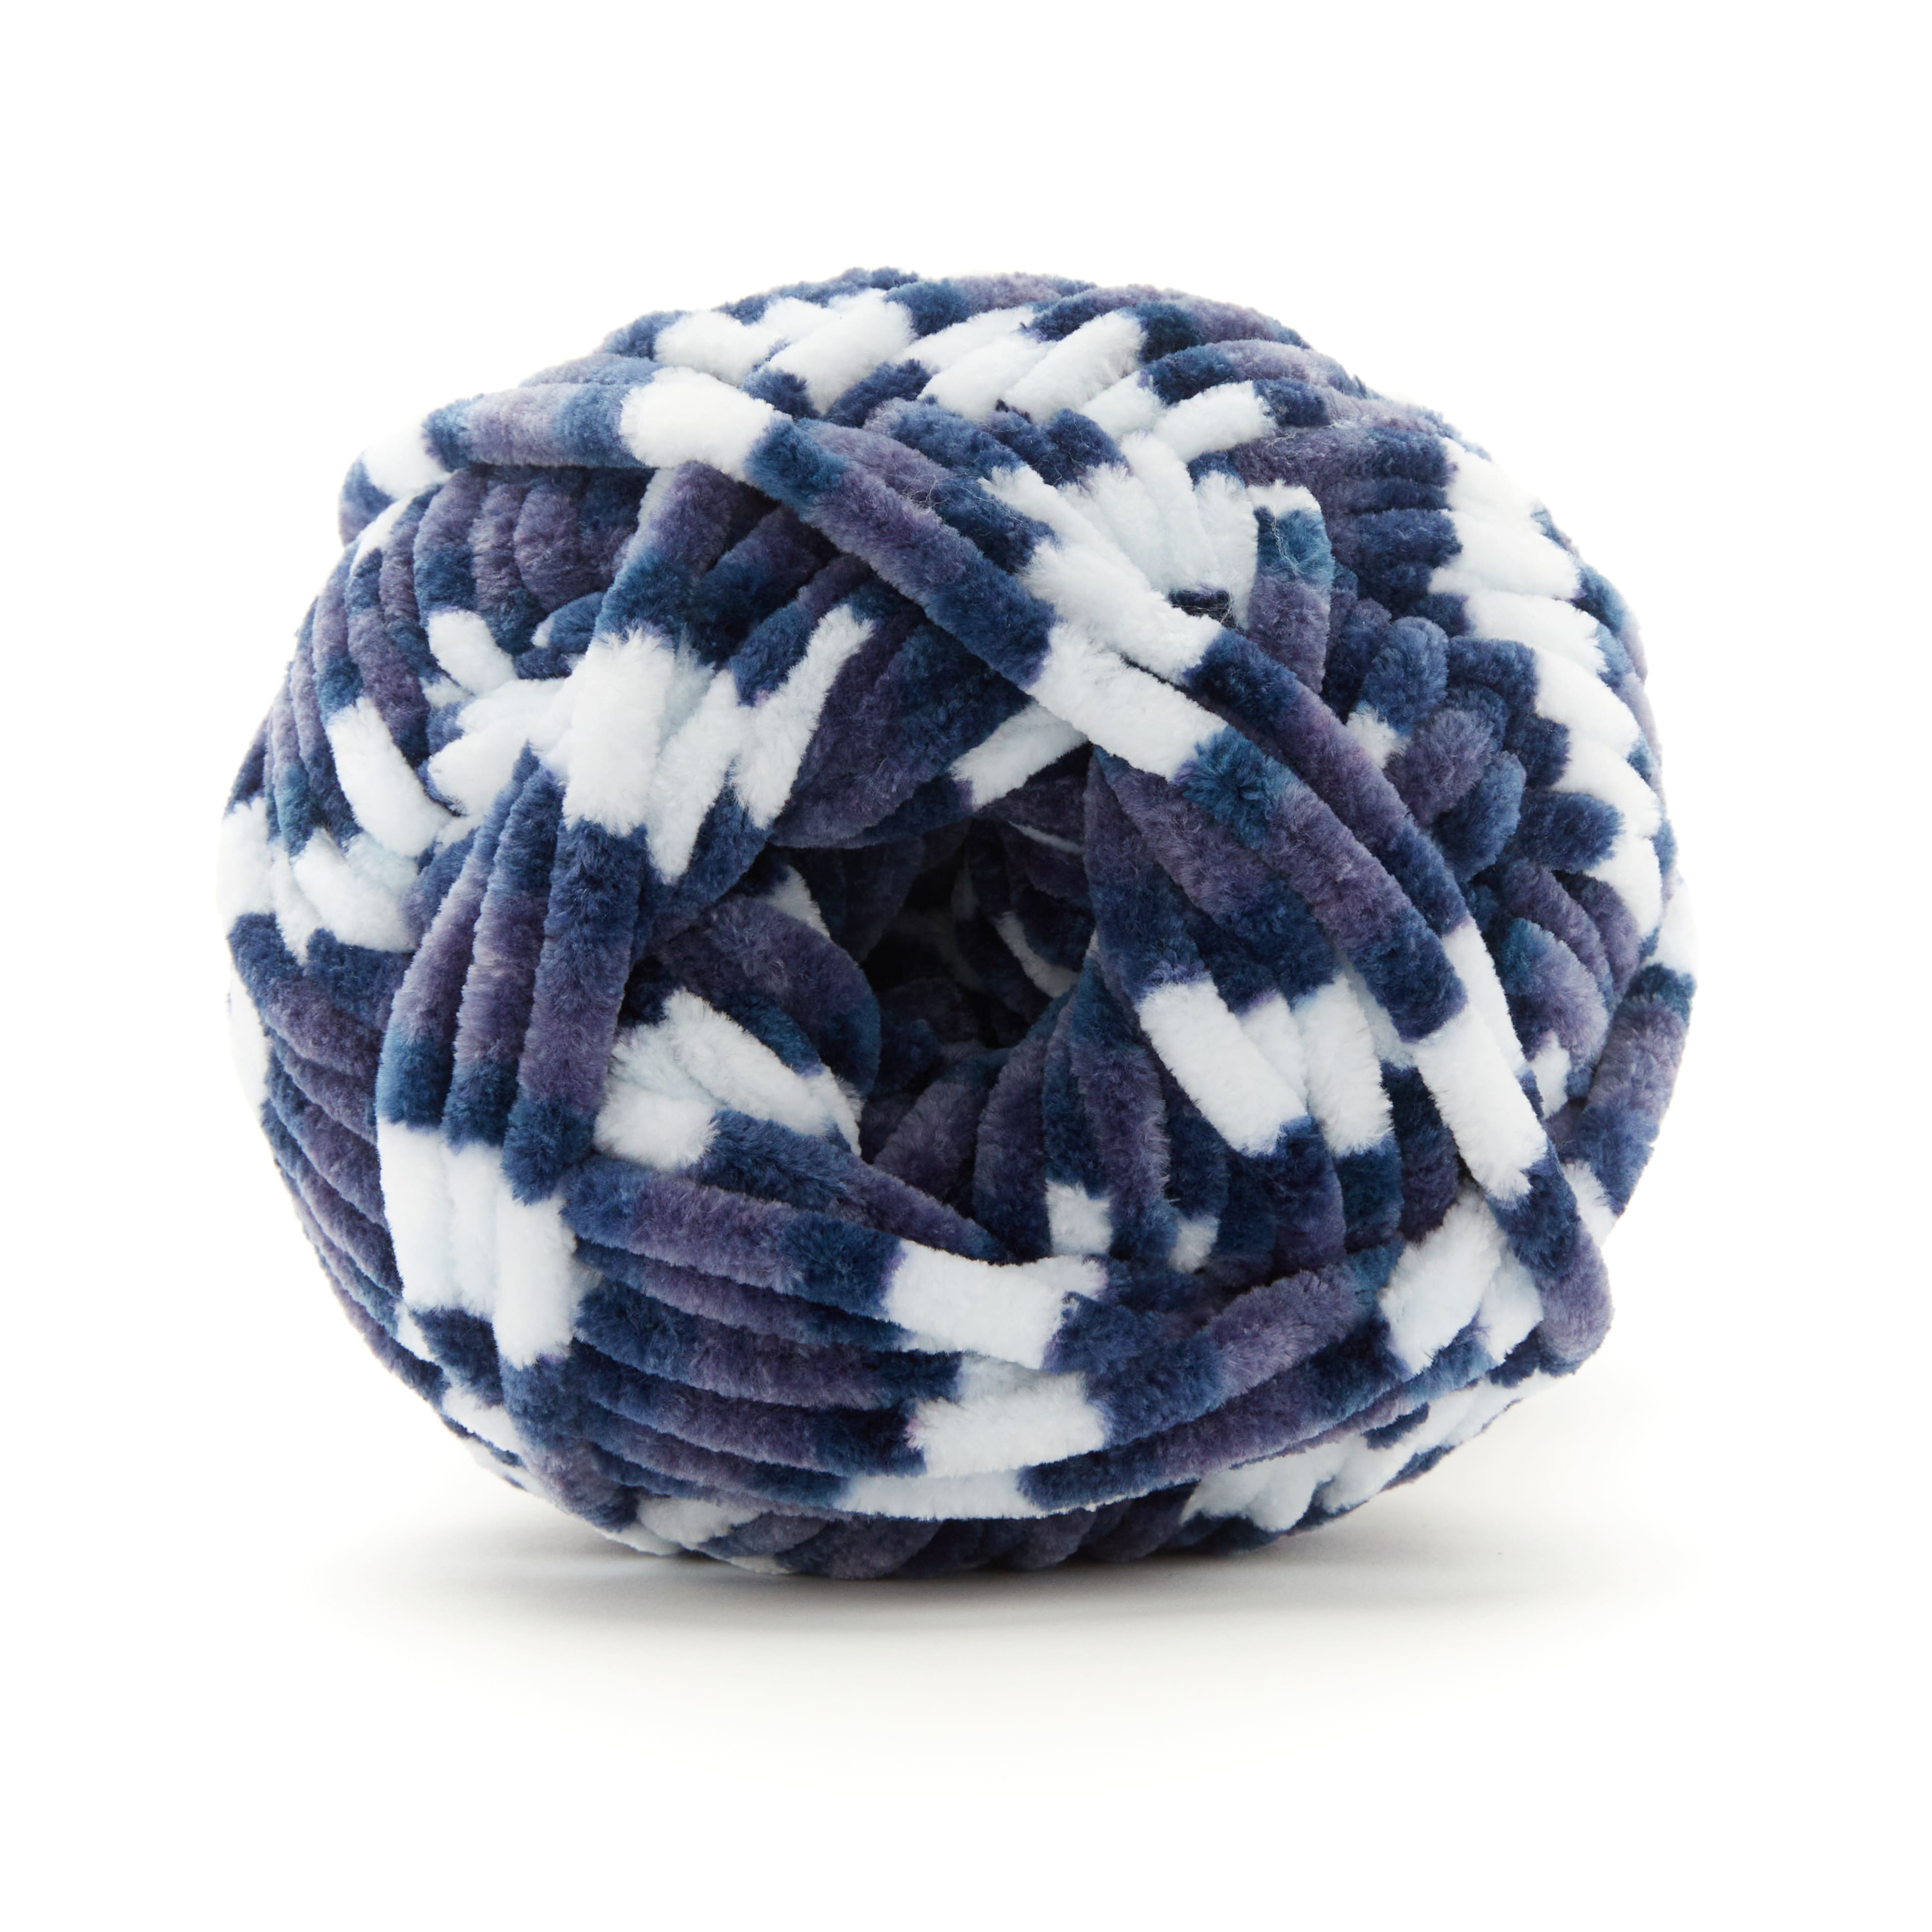 Sweet Snuggles™ Stripes Yarn by Loops & Threads®, Michaels